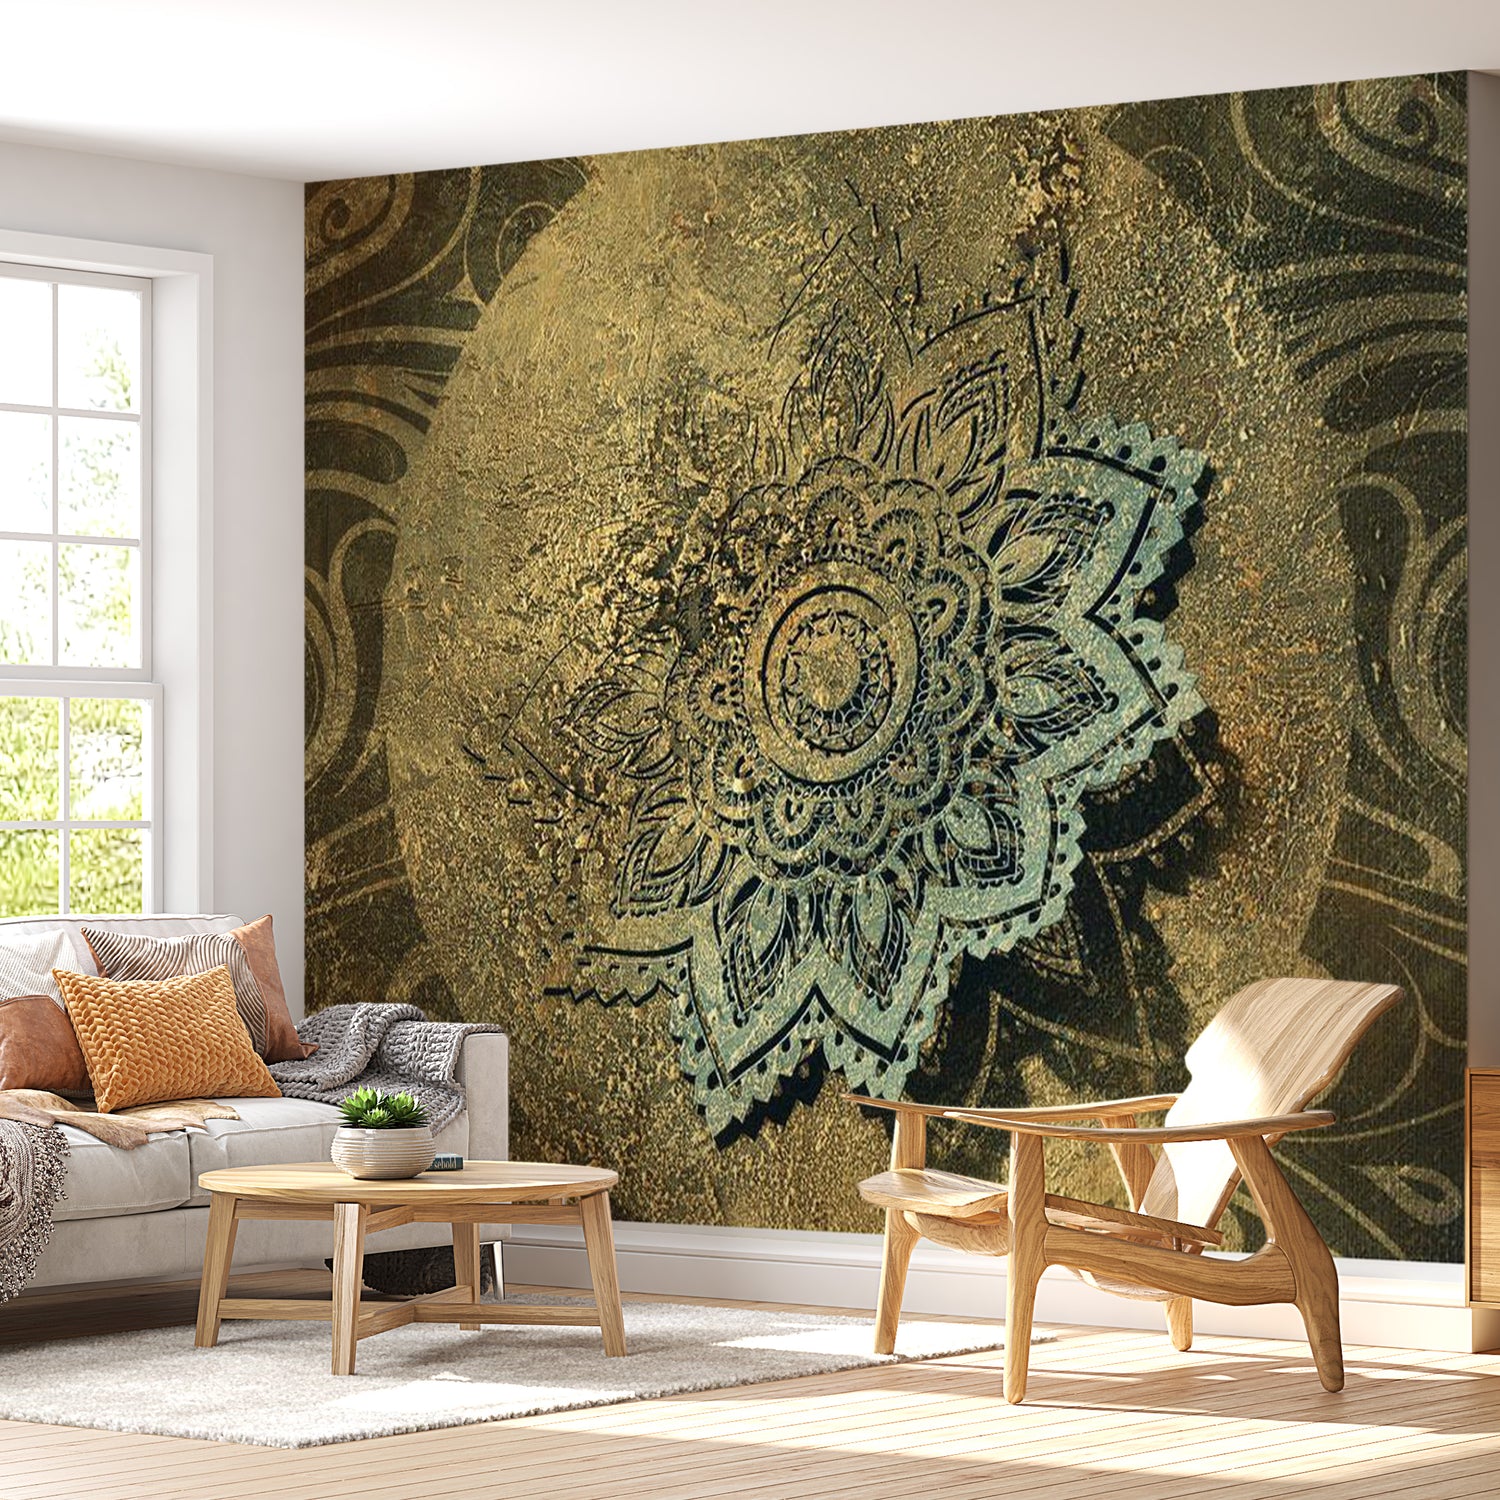 Peel & Stick Mandala Wall Mural - Golden Green Mandala - Removable Wall Decals